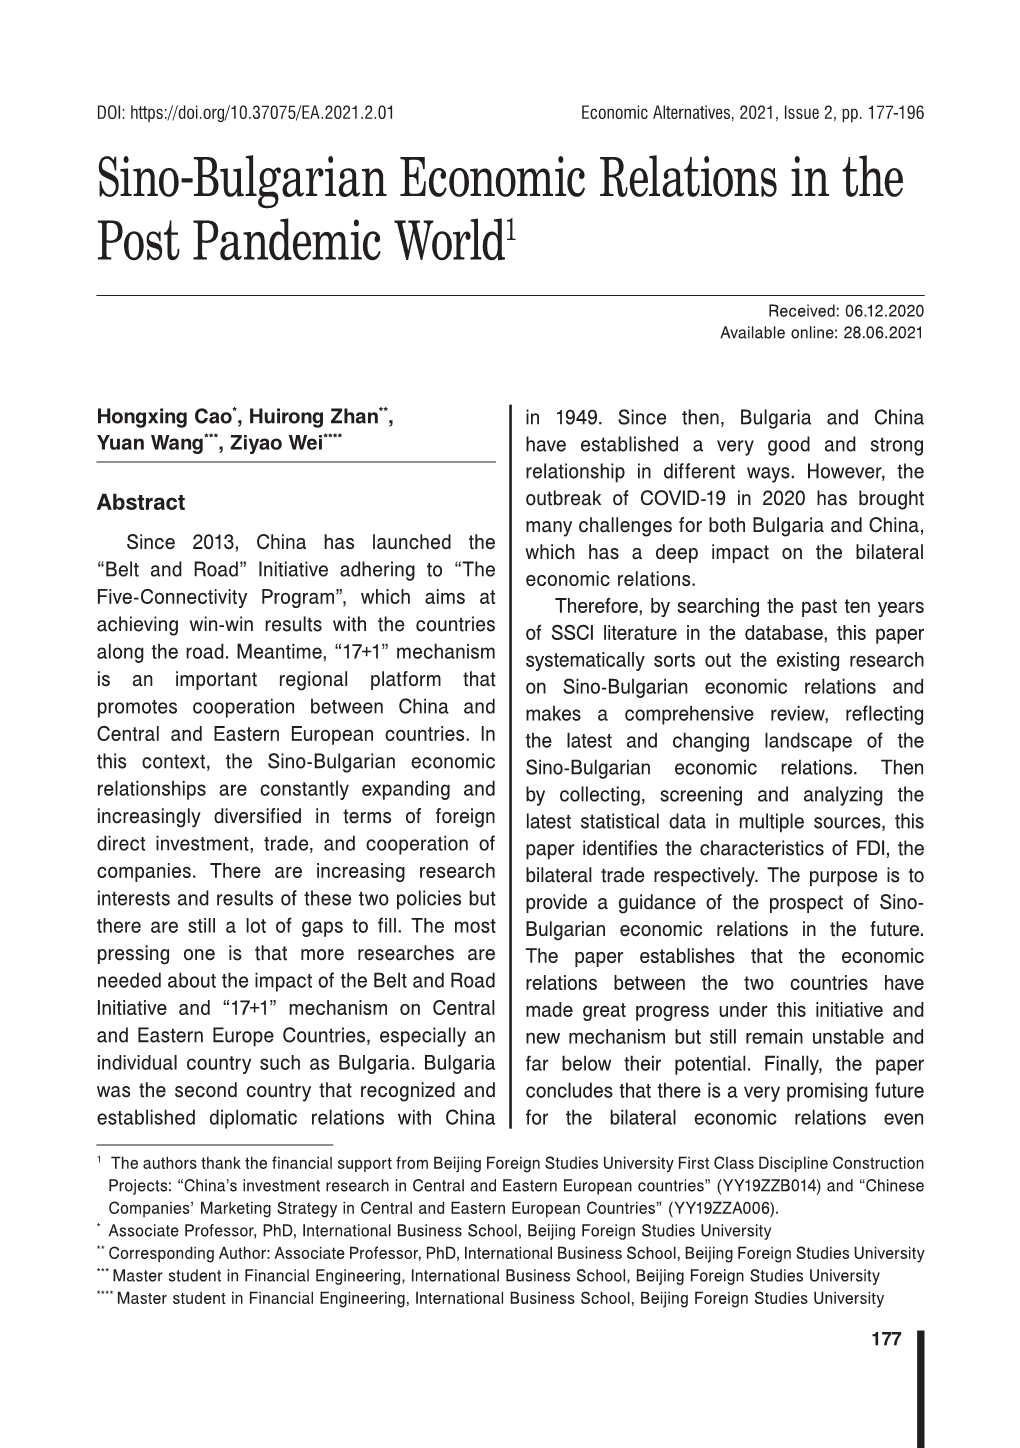 Sino-Bulgarian Economic Relations in the Post Pandemic World1